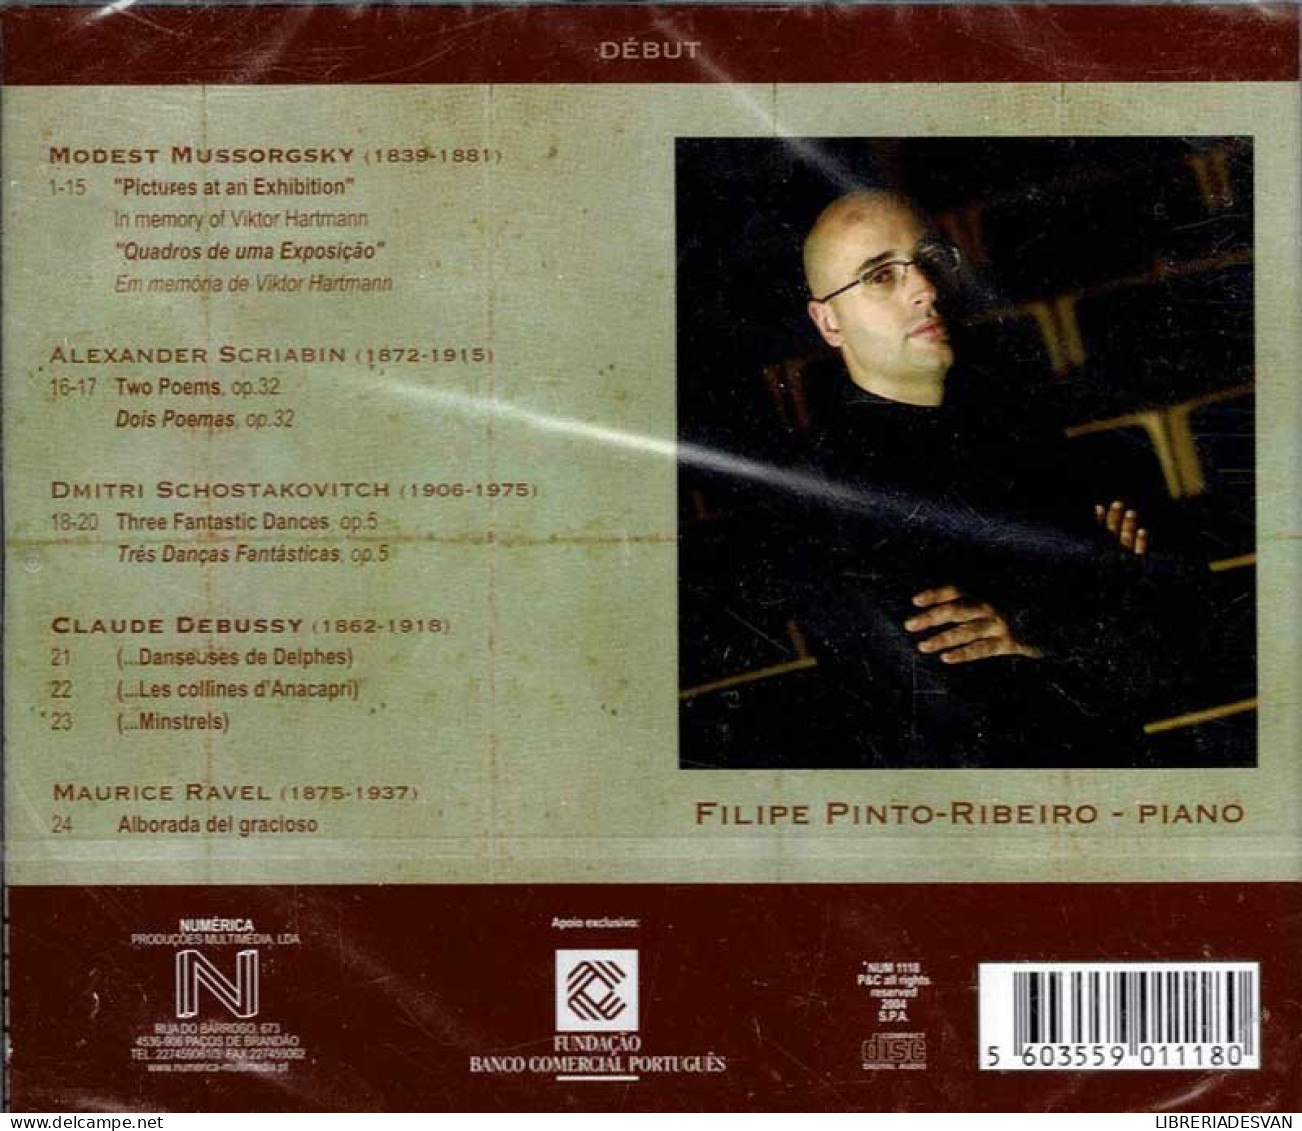 Filipe Pinto-Ribeiro - Début. CD - Klassiekers